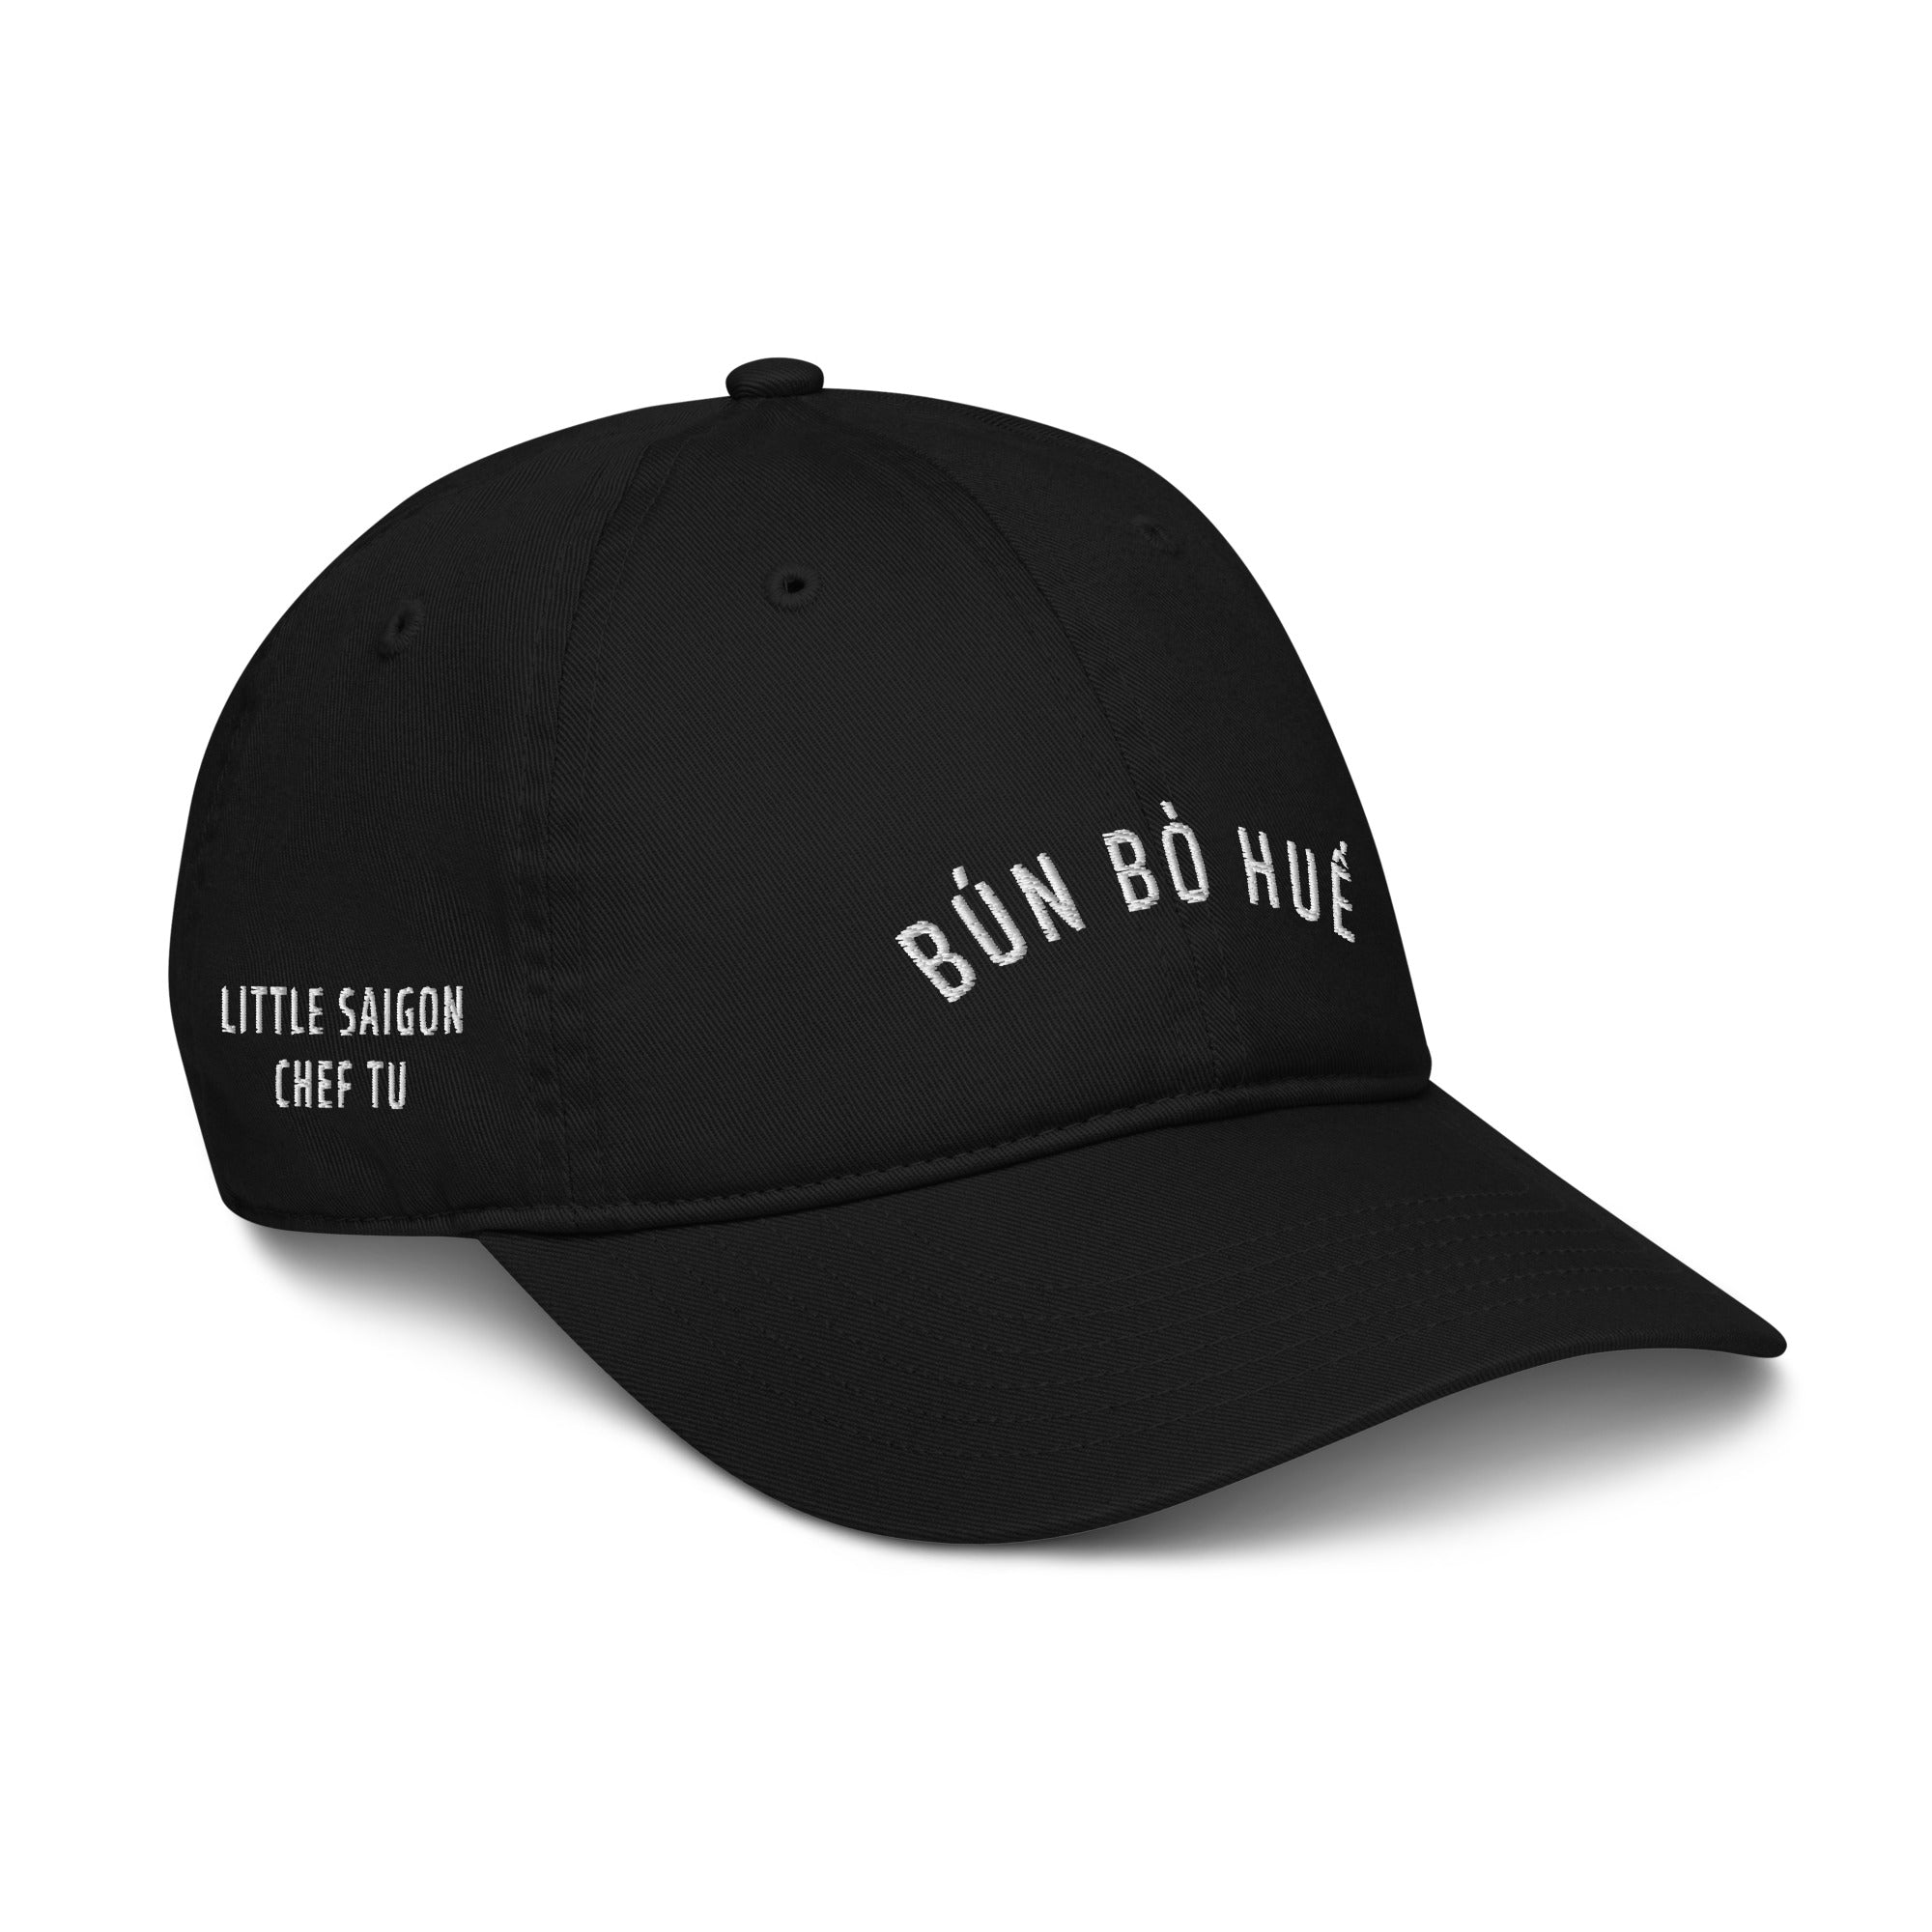 BÚN BÒ HUẾ Organic dad hat